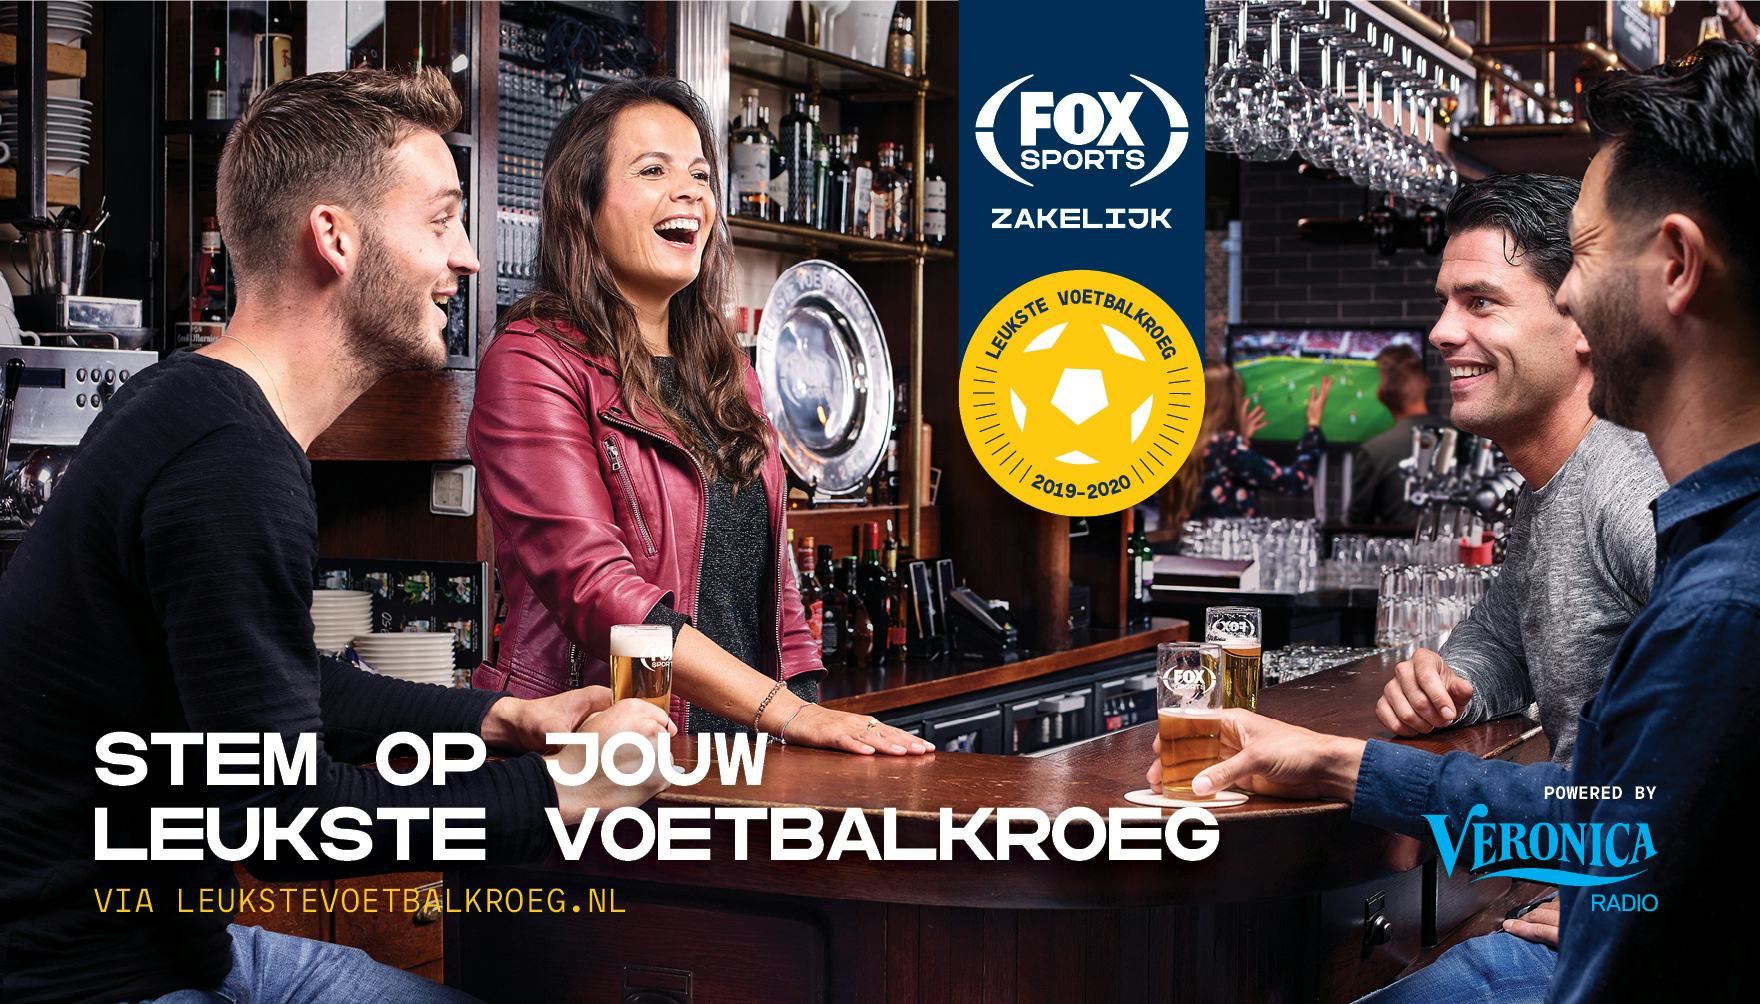 Fox Sports, KHN en Veronica zoeken 'Leukste Voetbalkroeg Nederland'